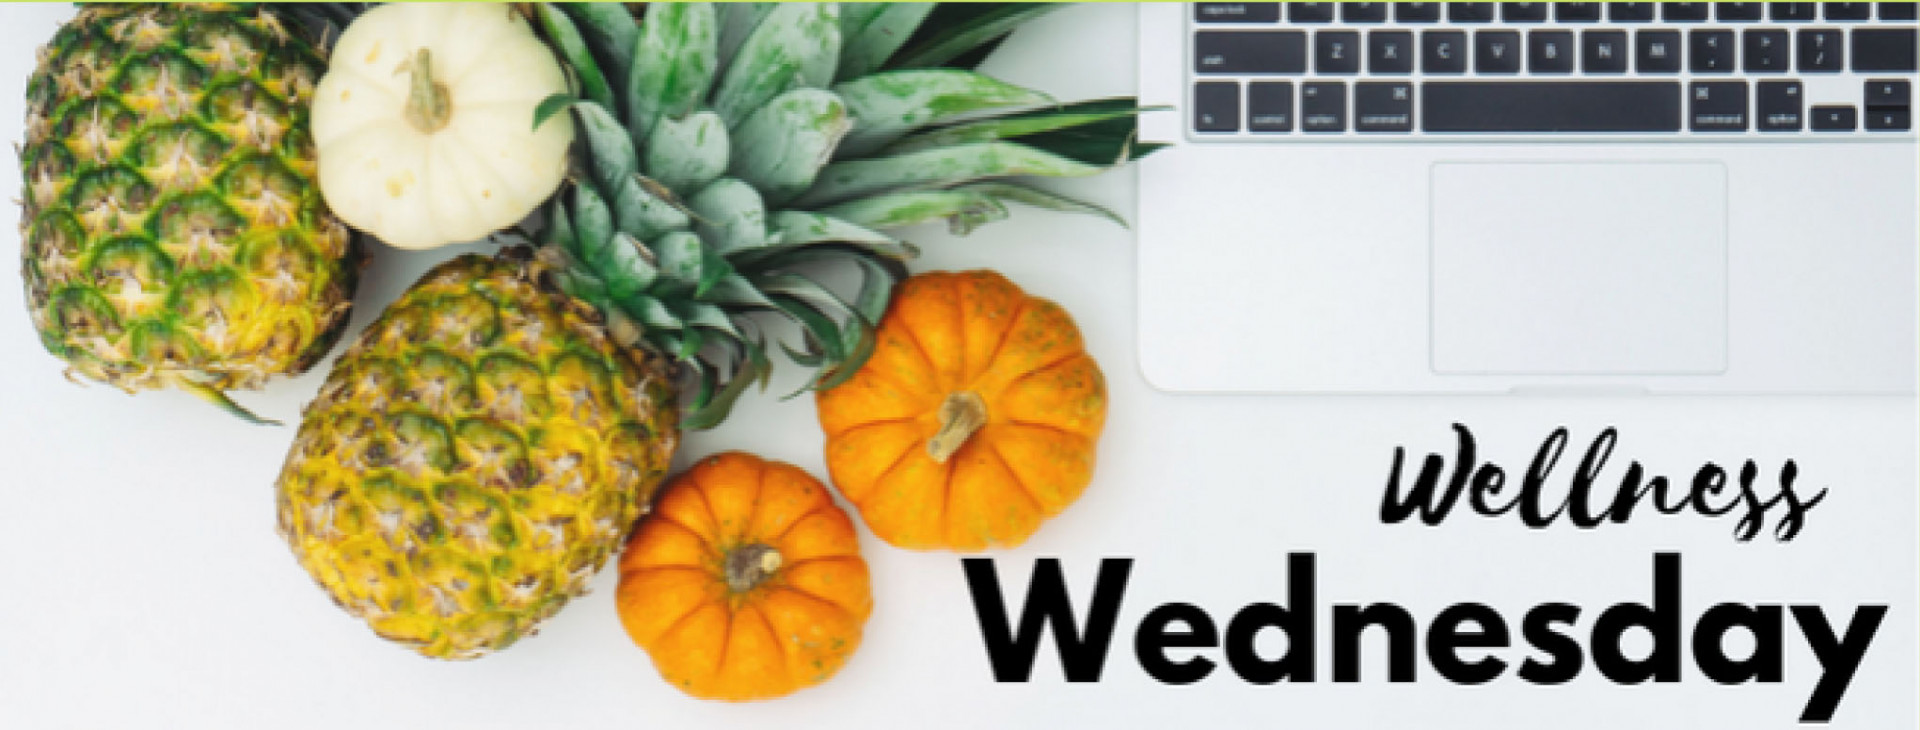 Wellness Wednesday - October 16th, 2019